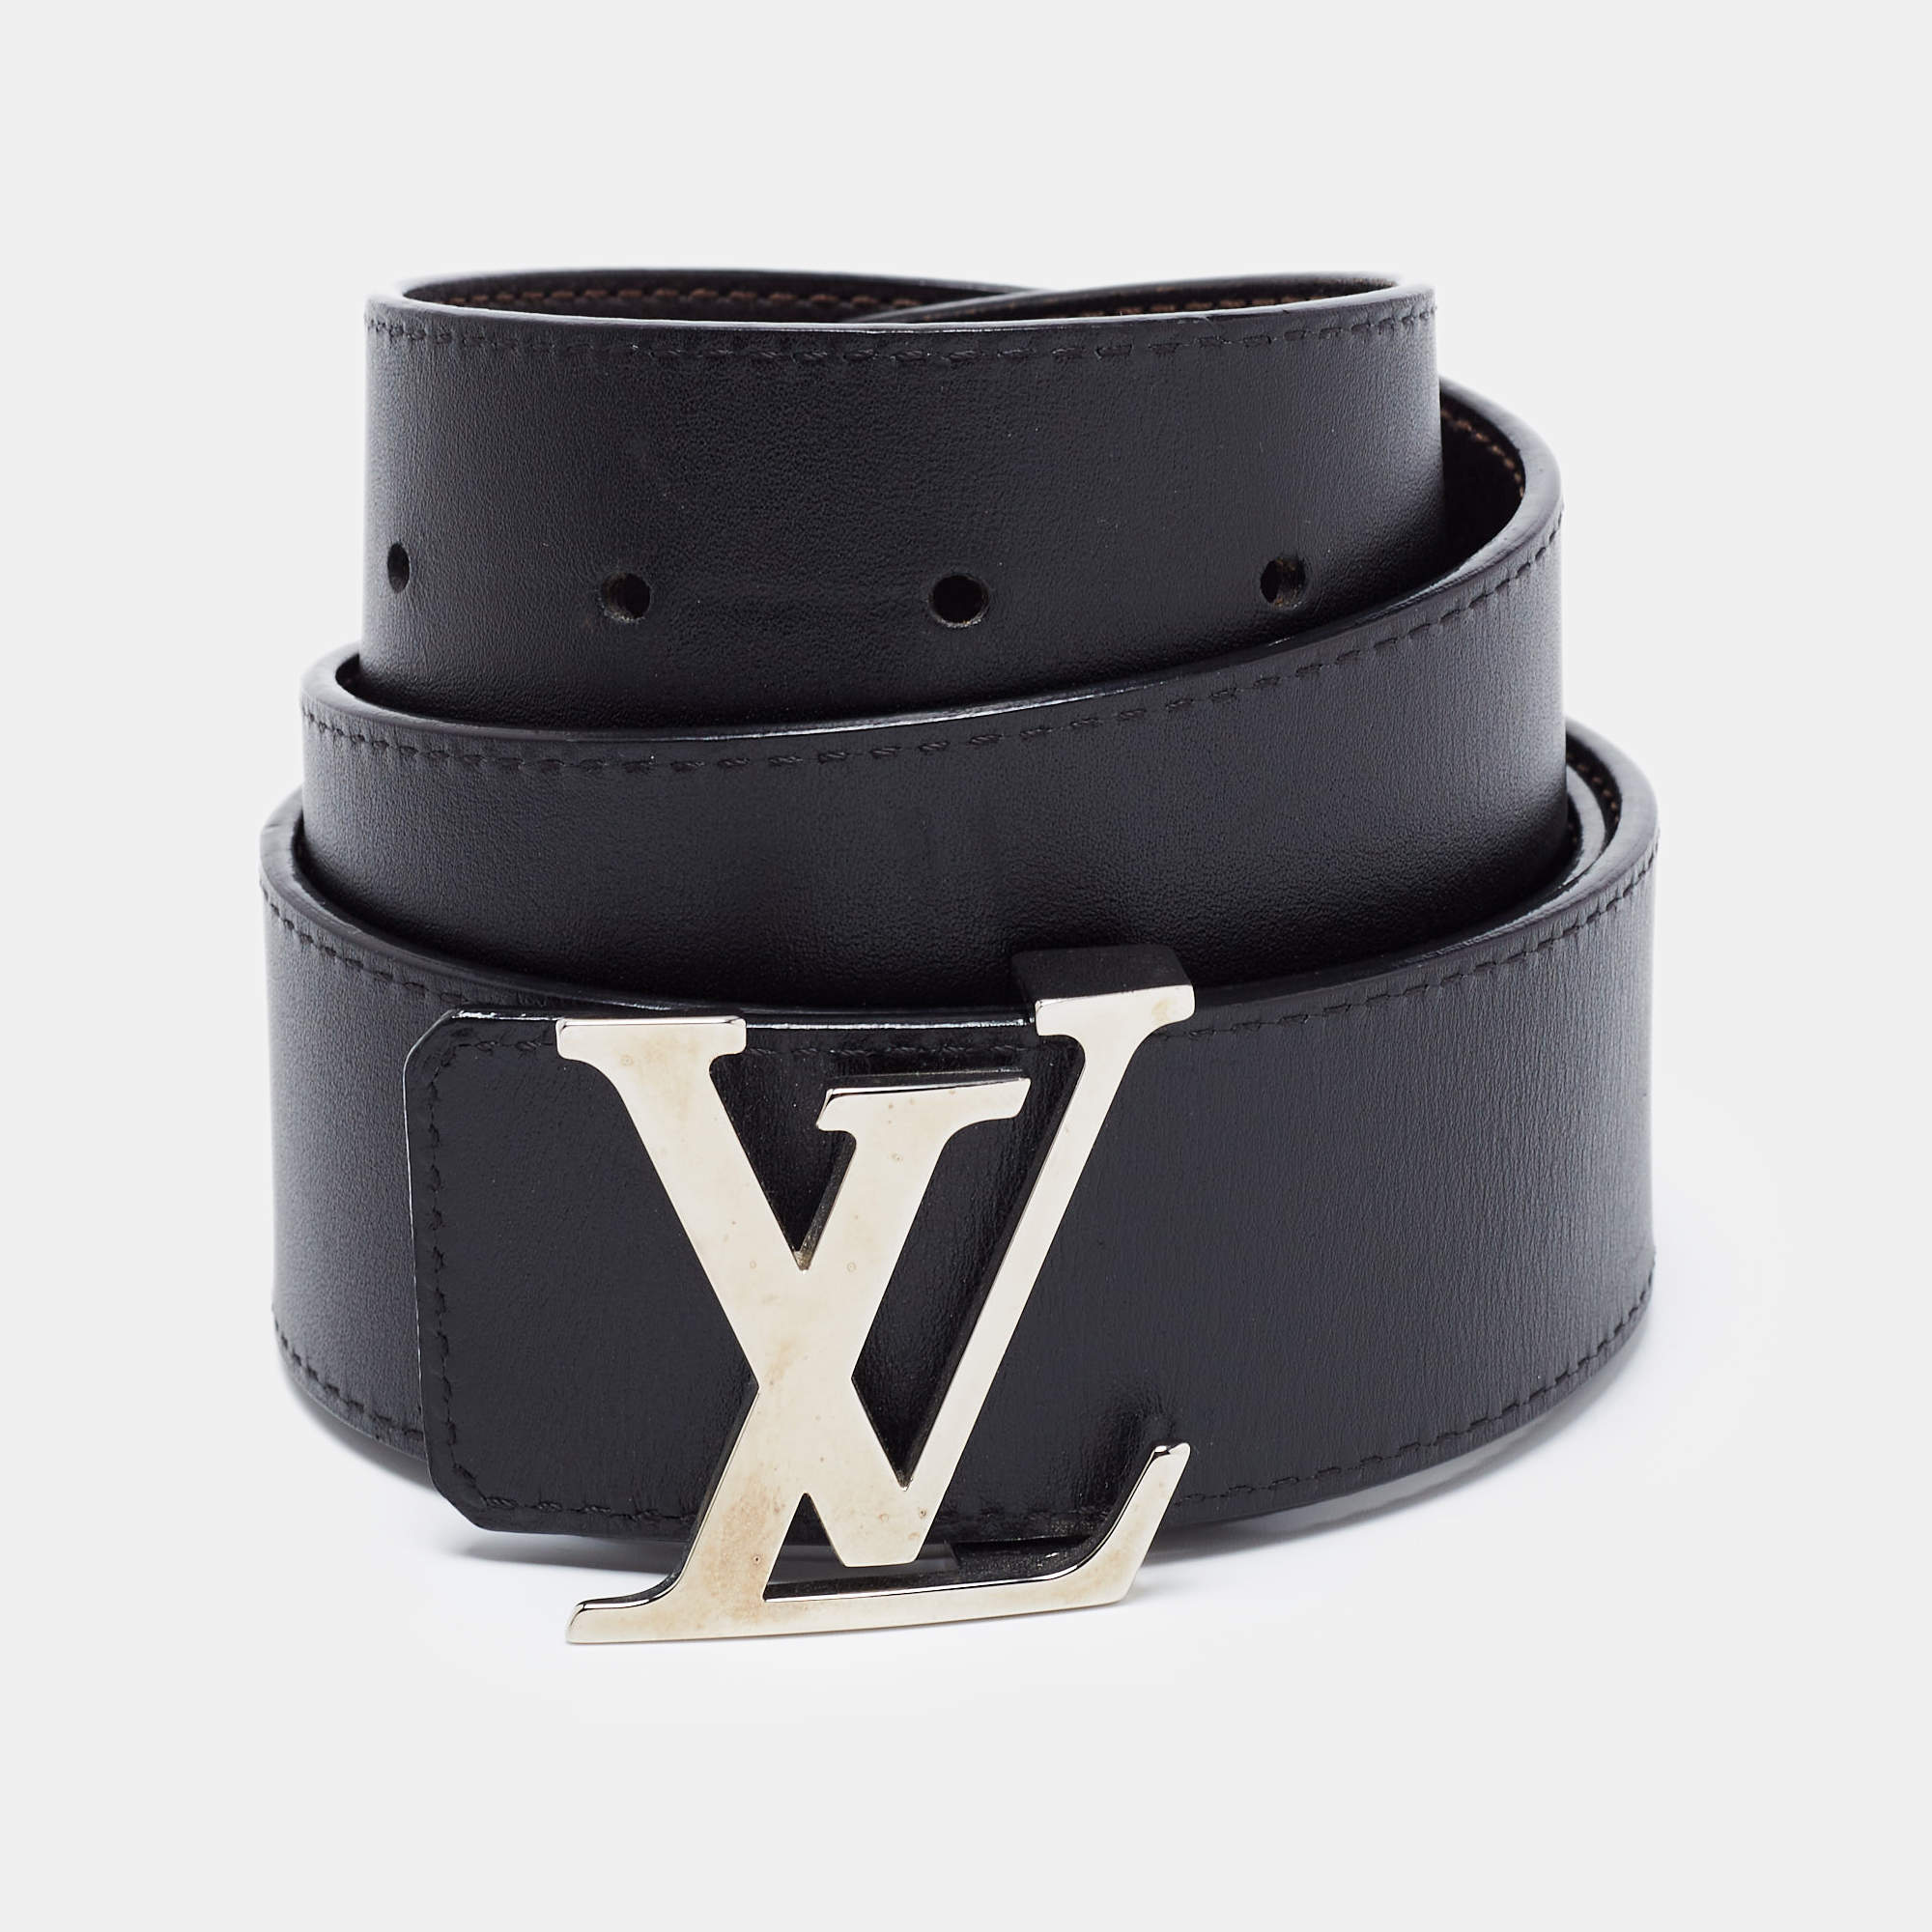 Louis Vuitton LV Duo 18mm Reversible Belt Brown + Calf Leather. Size 90 cm